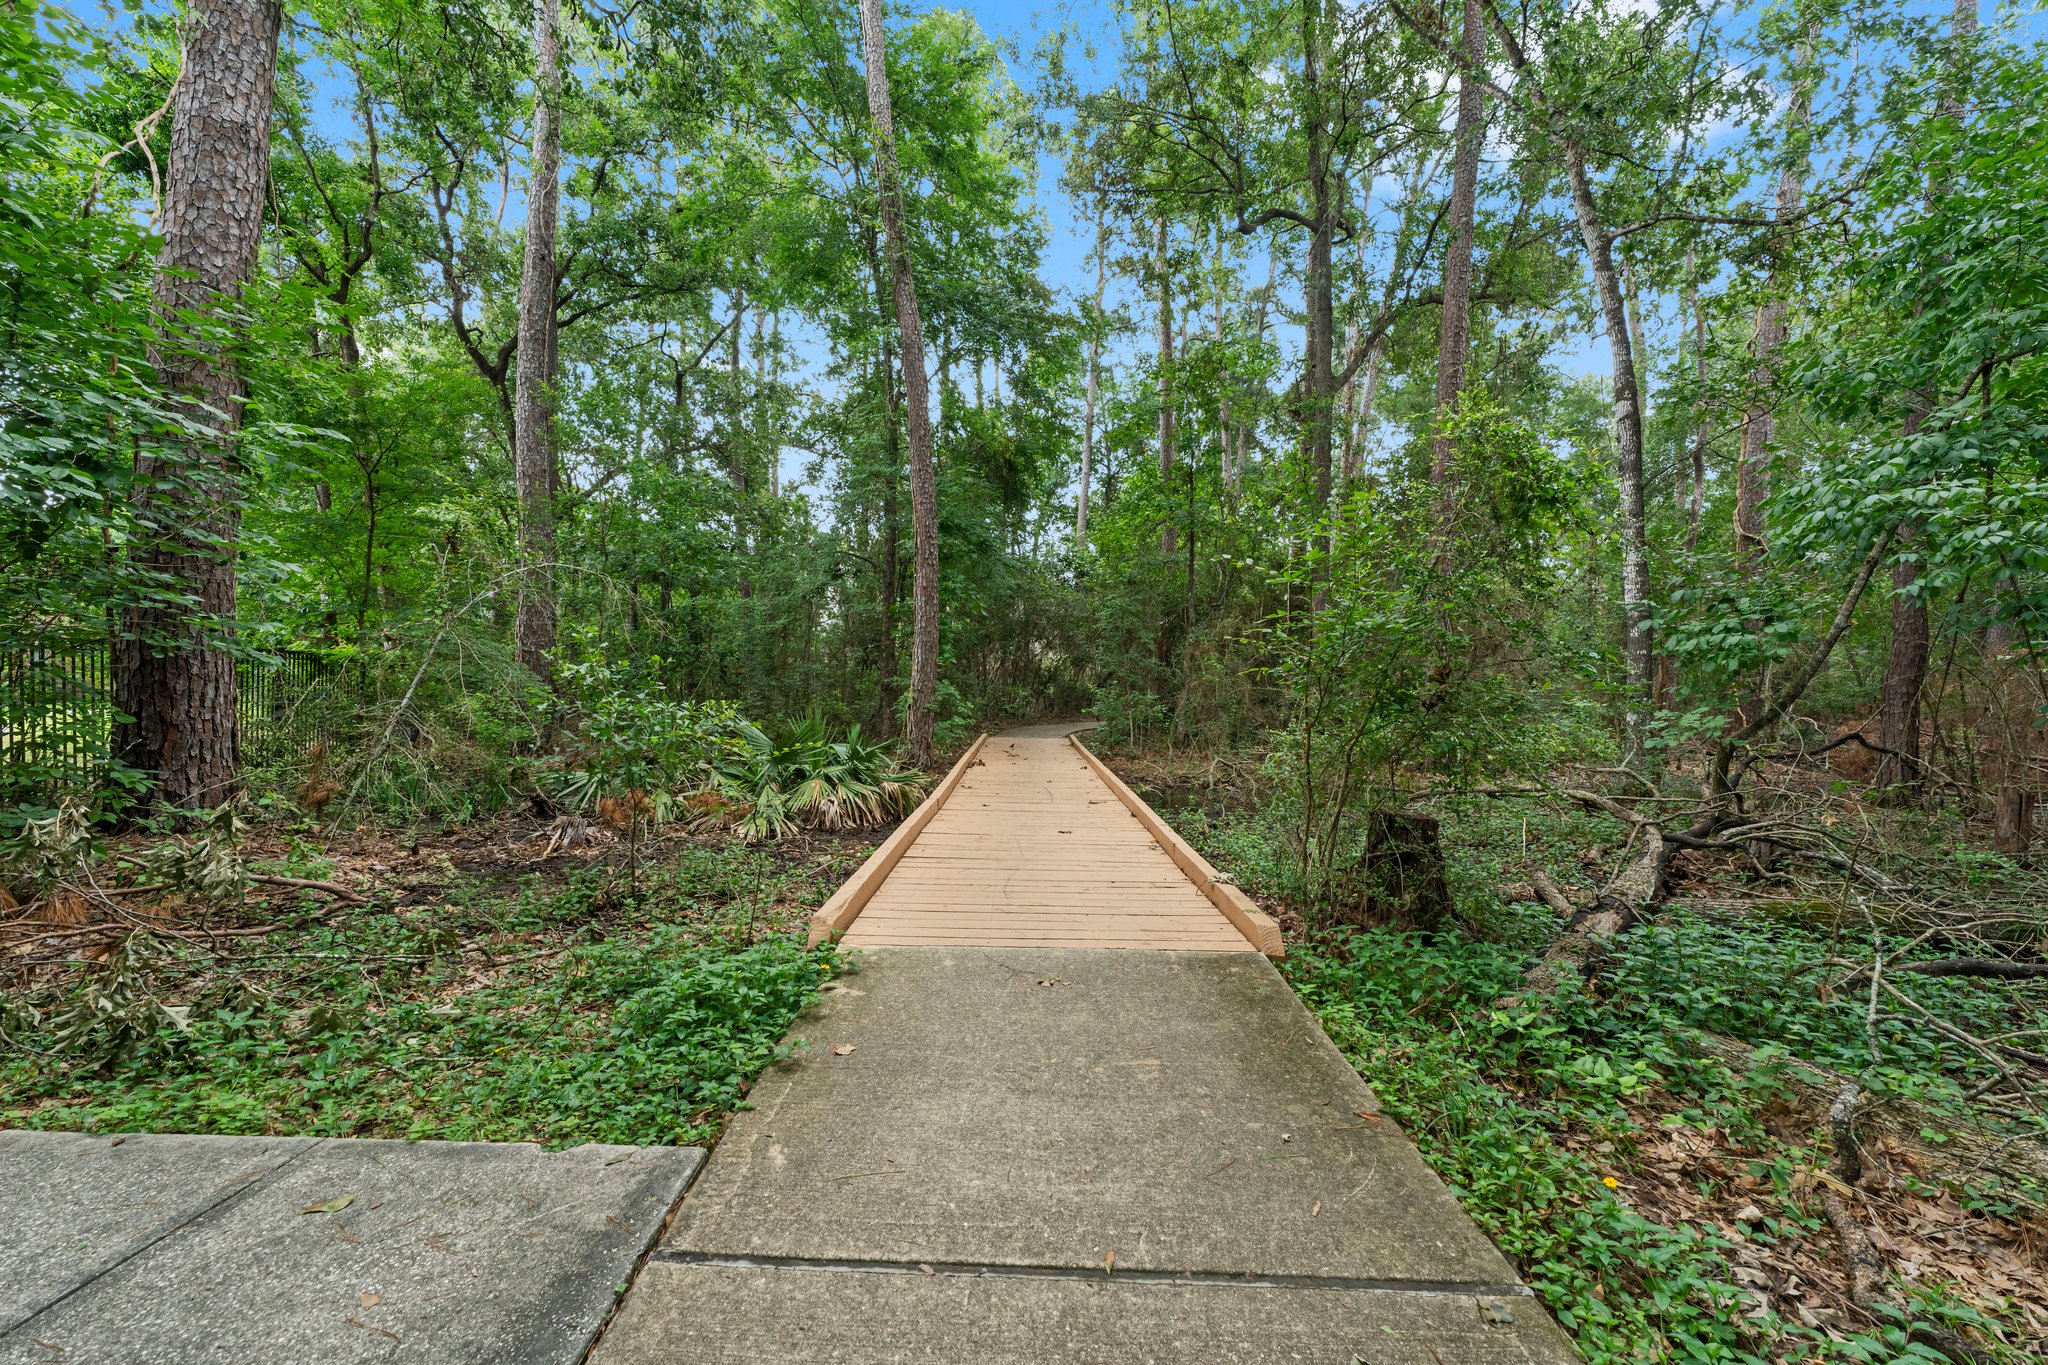 Imperial Oaks Park 1 mile tree lined walking path.